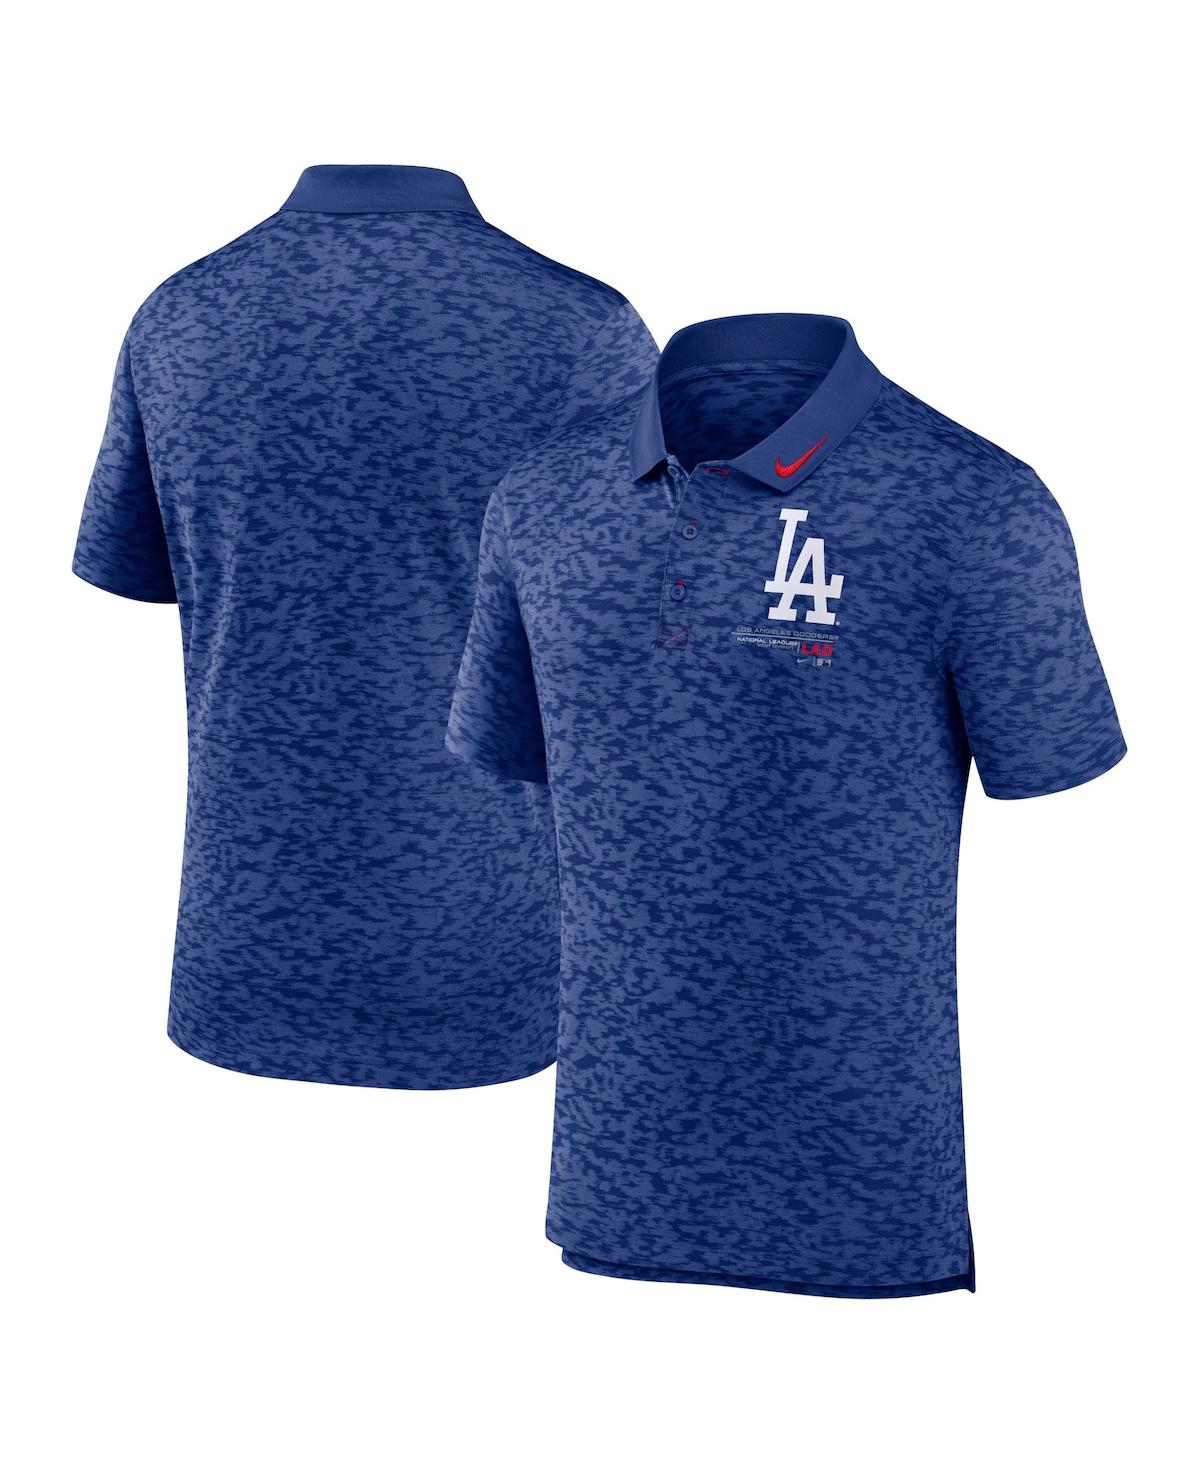 Men's Nike Royal Los Angeles Dodgers Next Level Polo Shirt - Royal